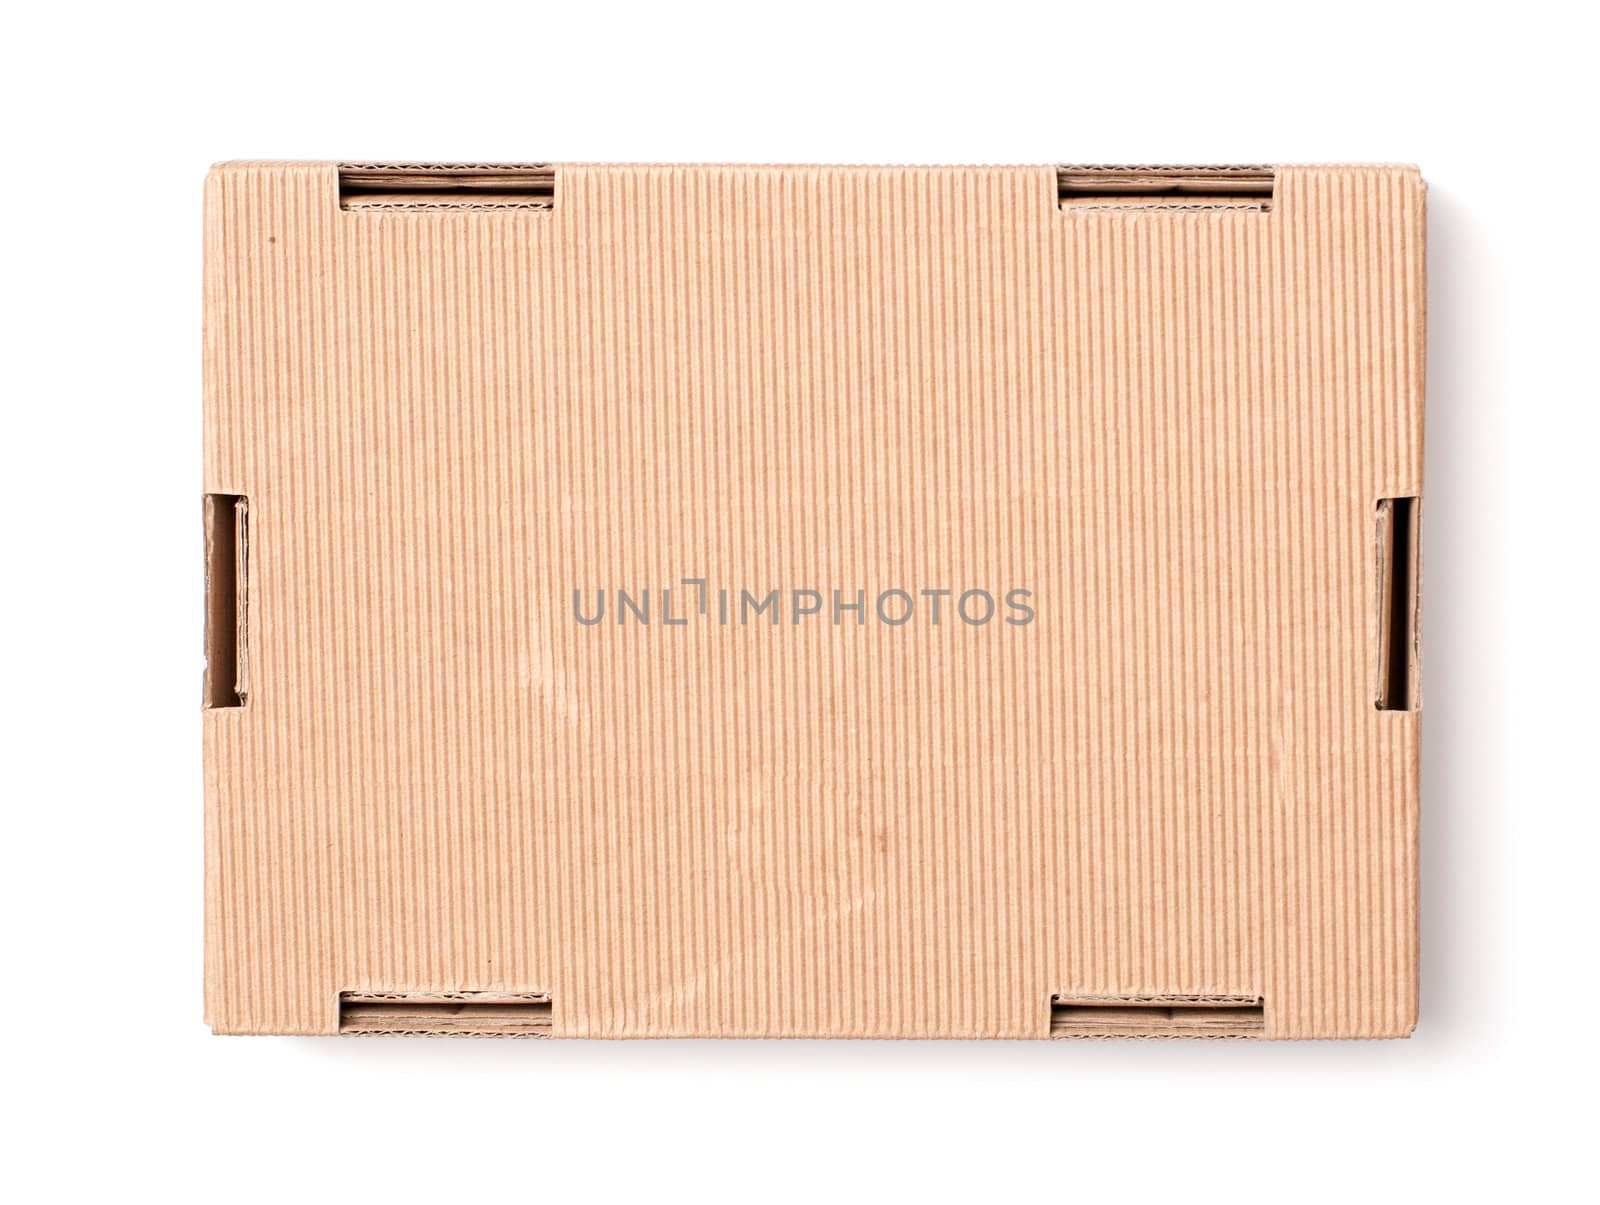 Cardboard box by DNKSTUDIO